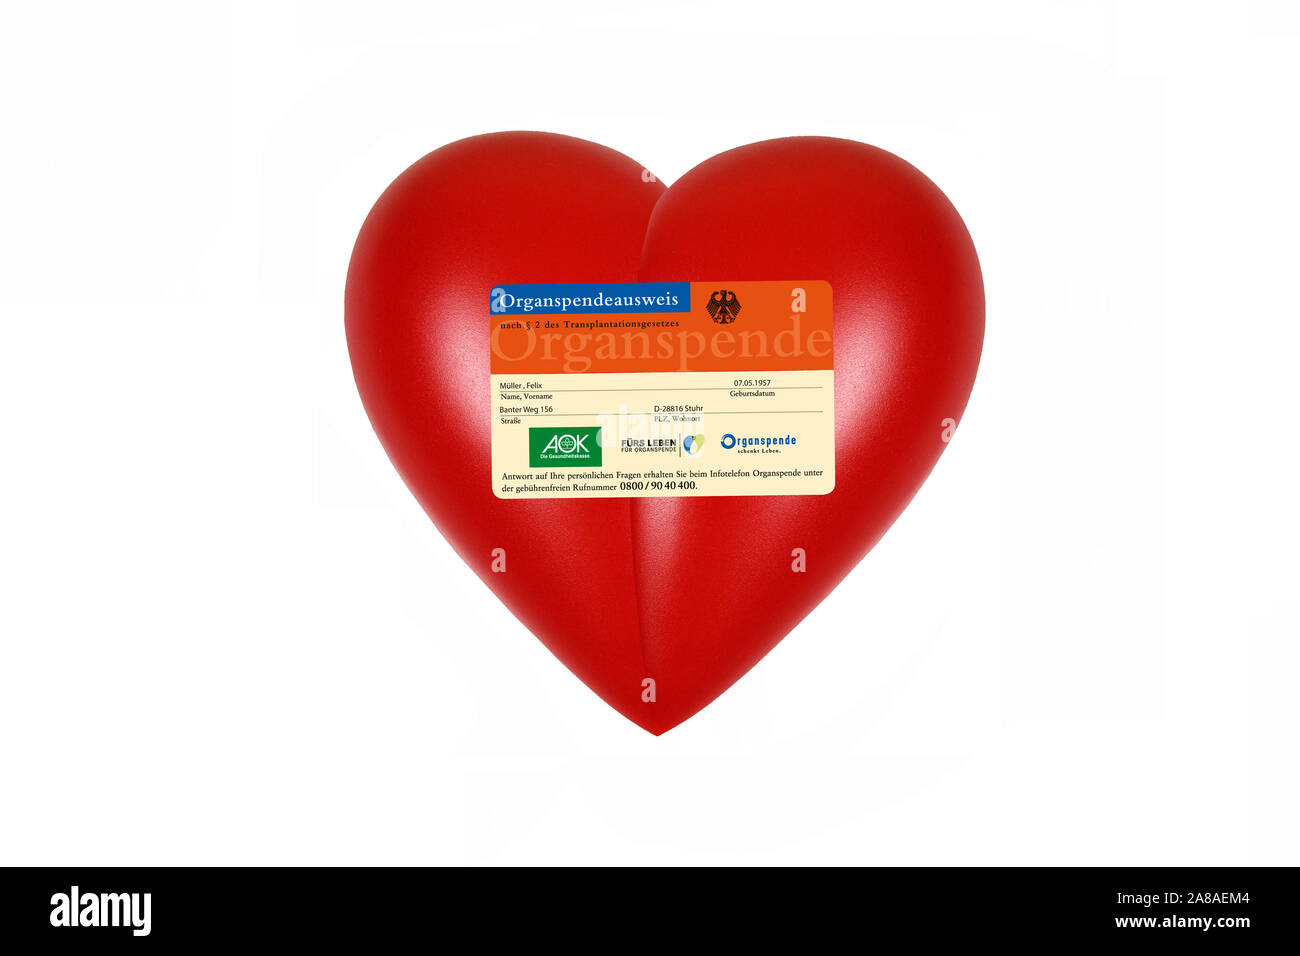 Rotes Herz, órgano, Gesundheit, Körperteil, Organspendeausweis, Foto de stock